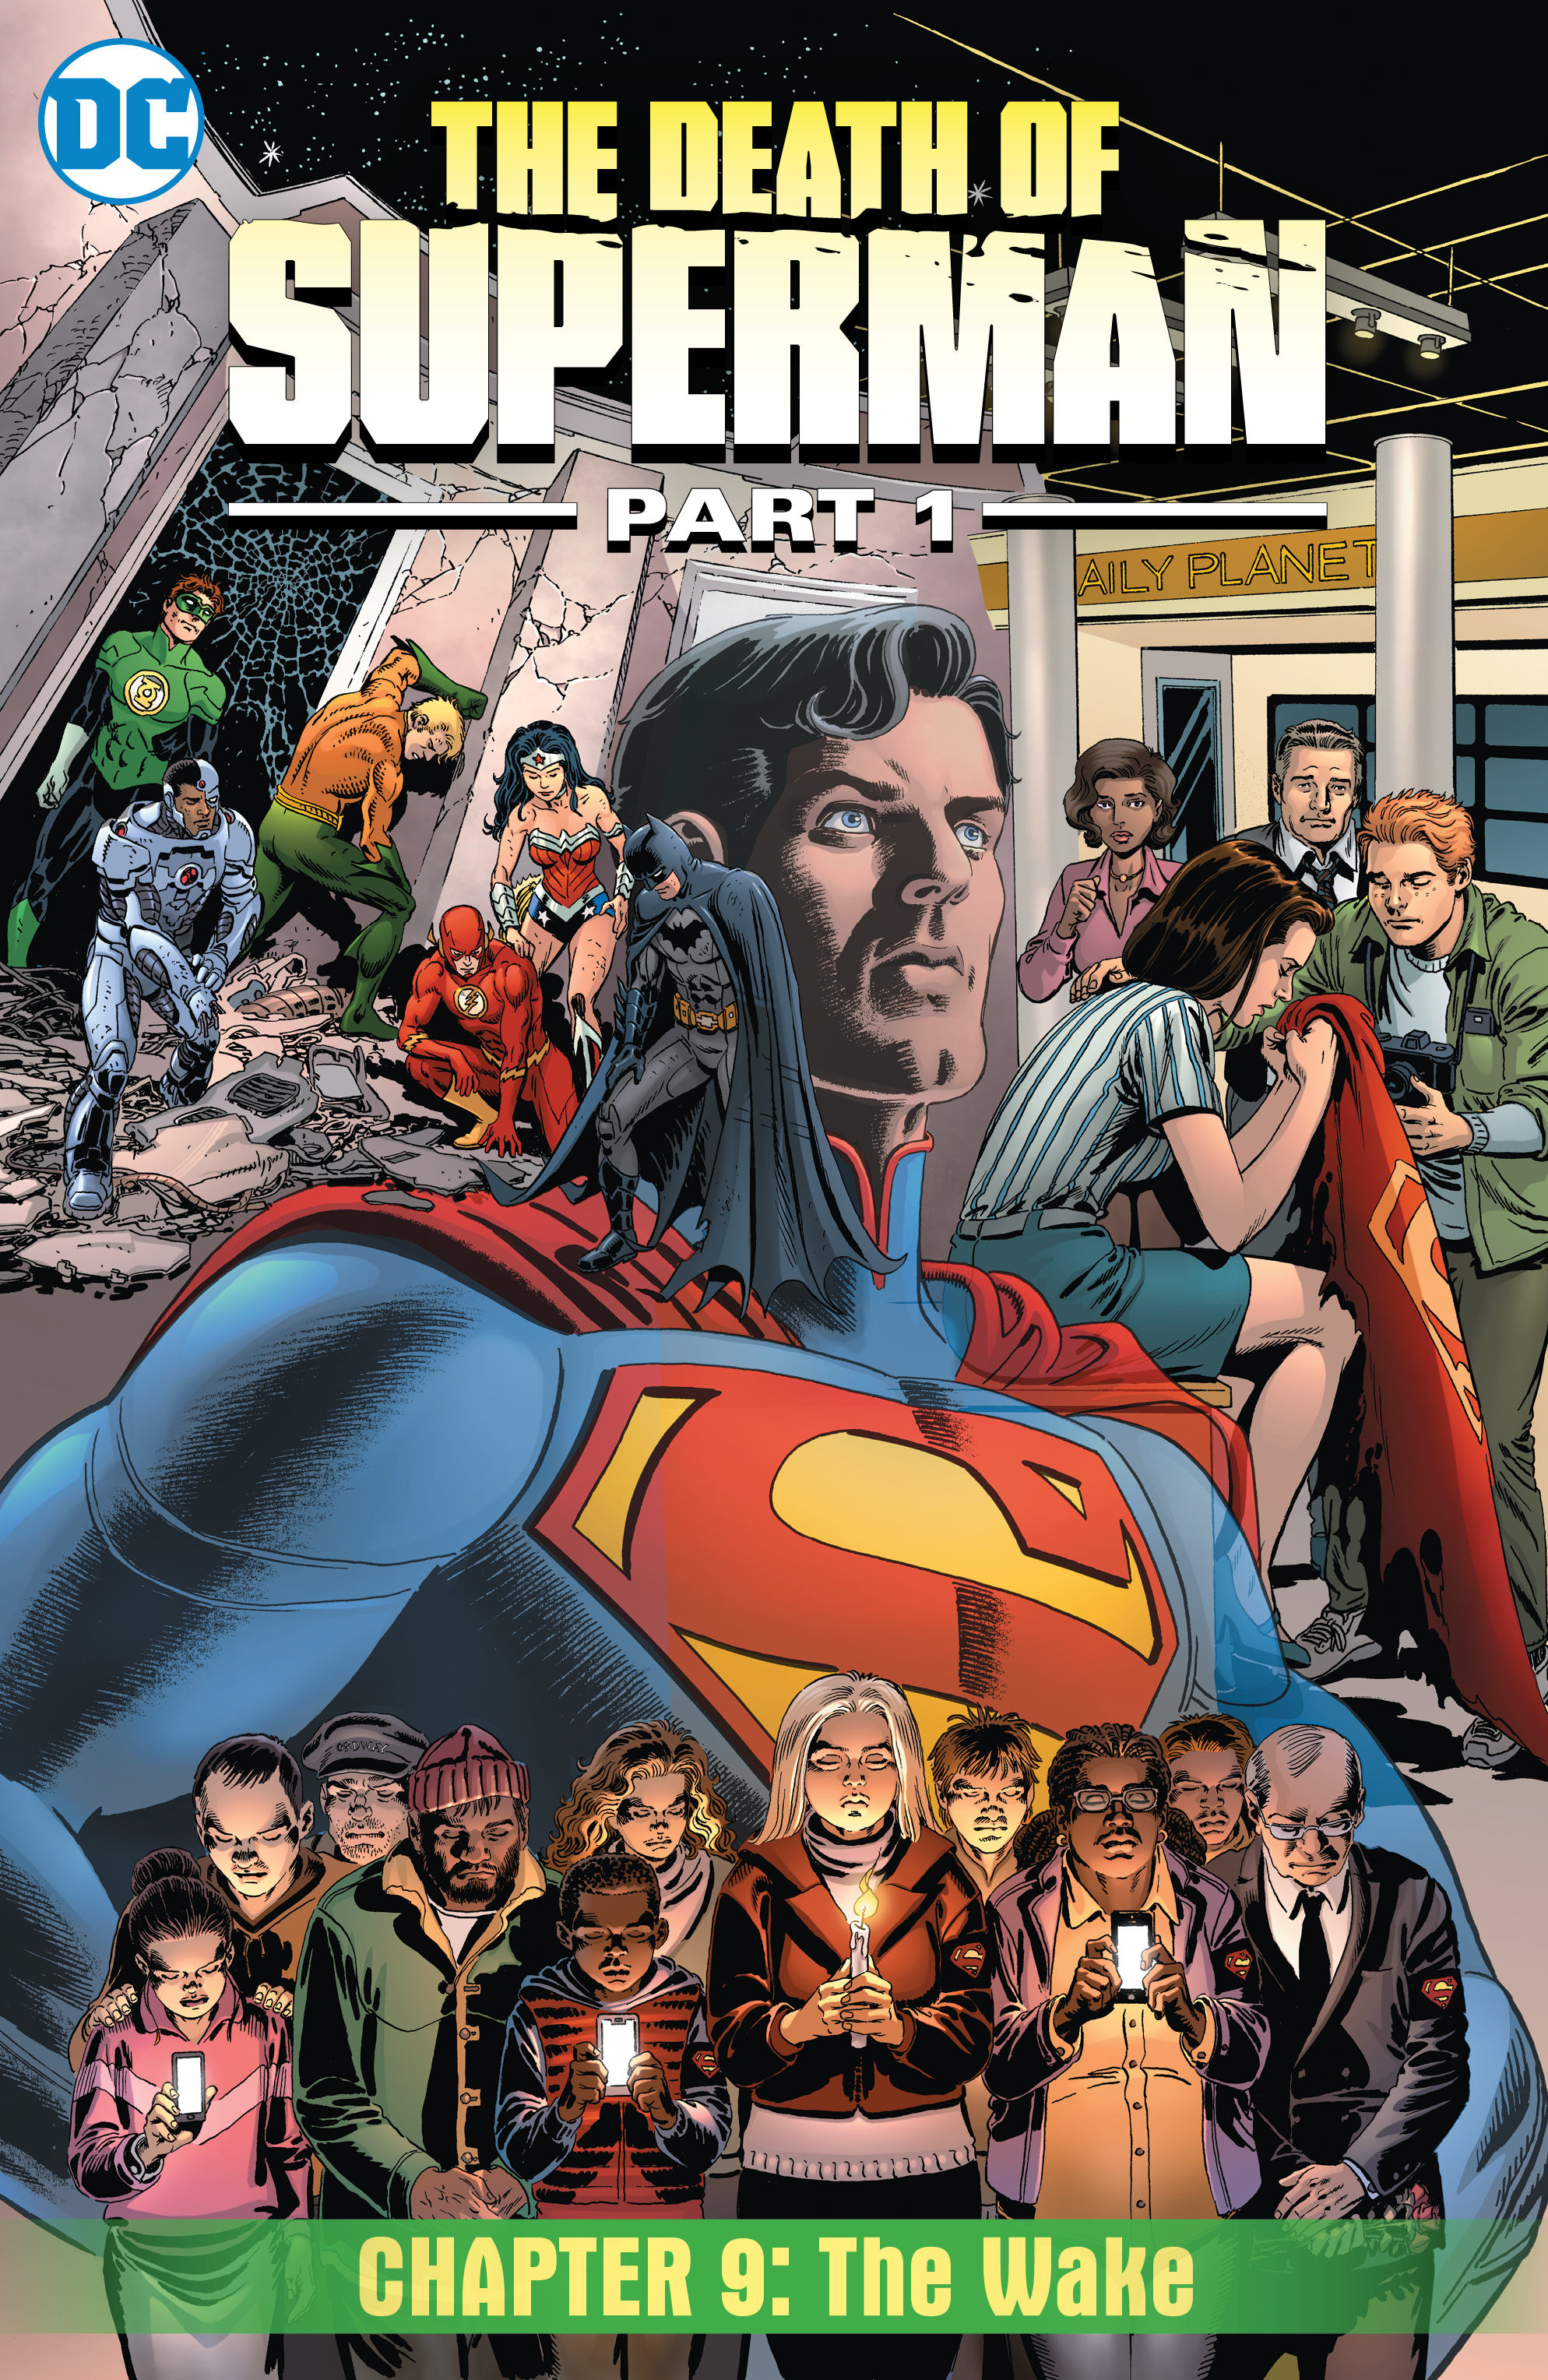 Death of Superman, Part 1 #9 preview images